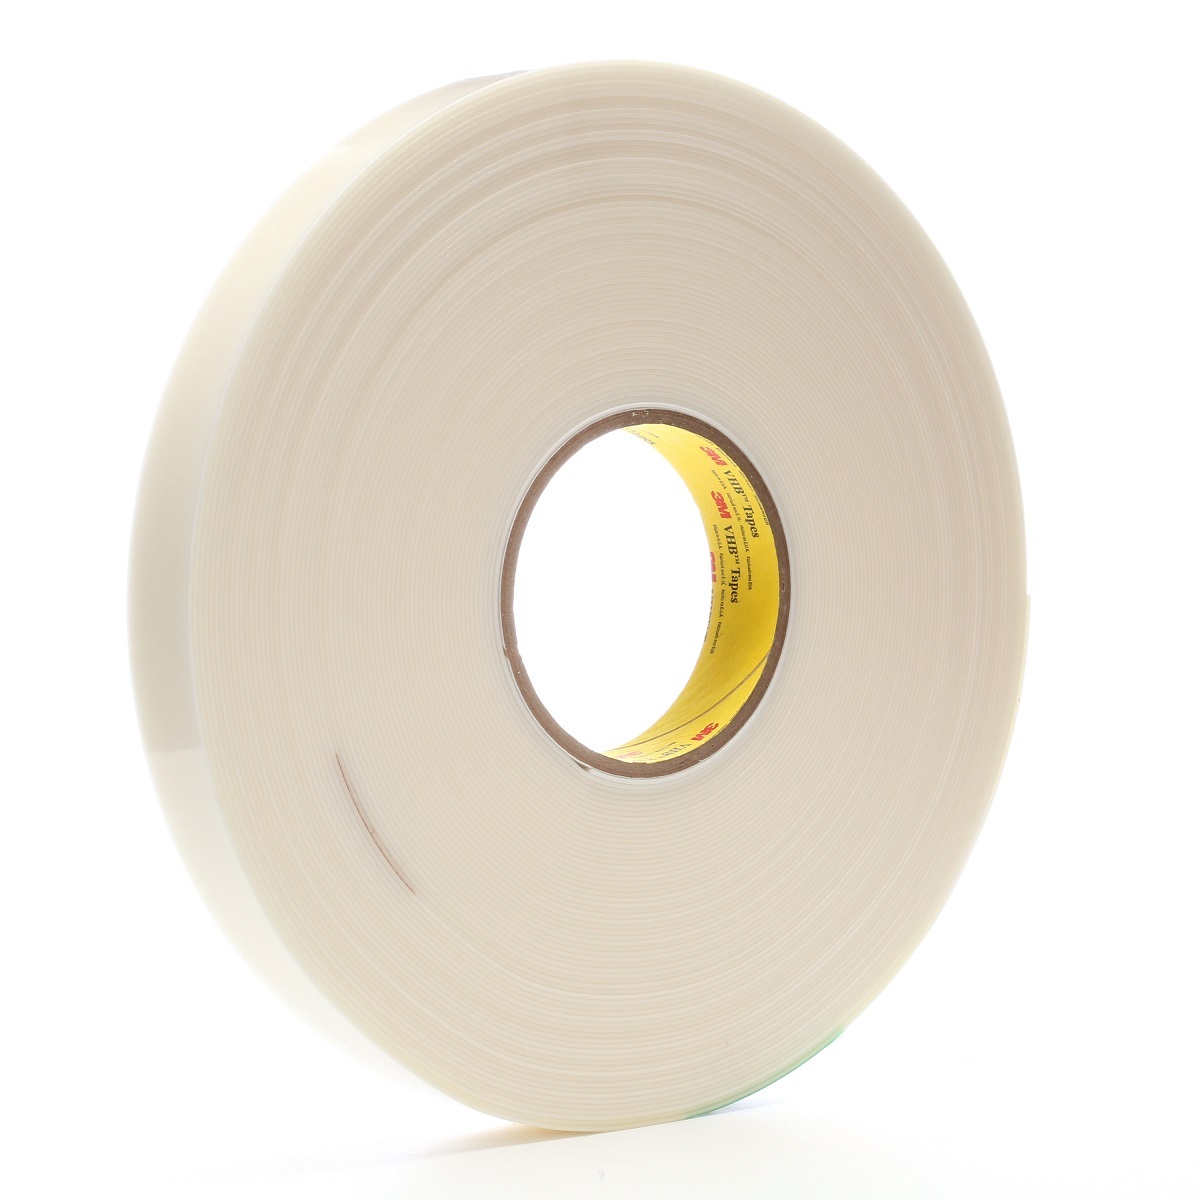 3M™ VHB™ Adhesive Tape, Foam & Other VHB Types